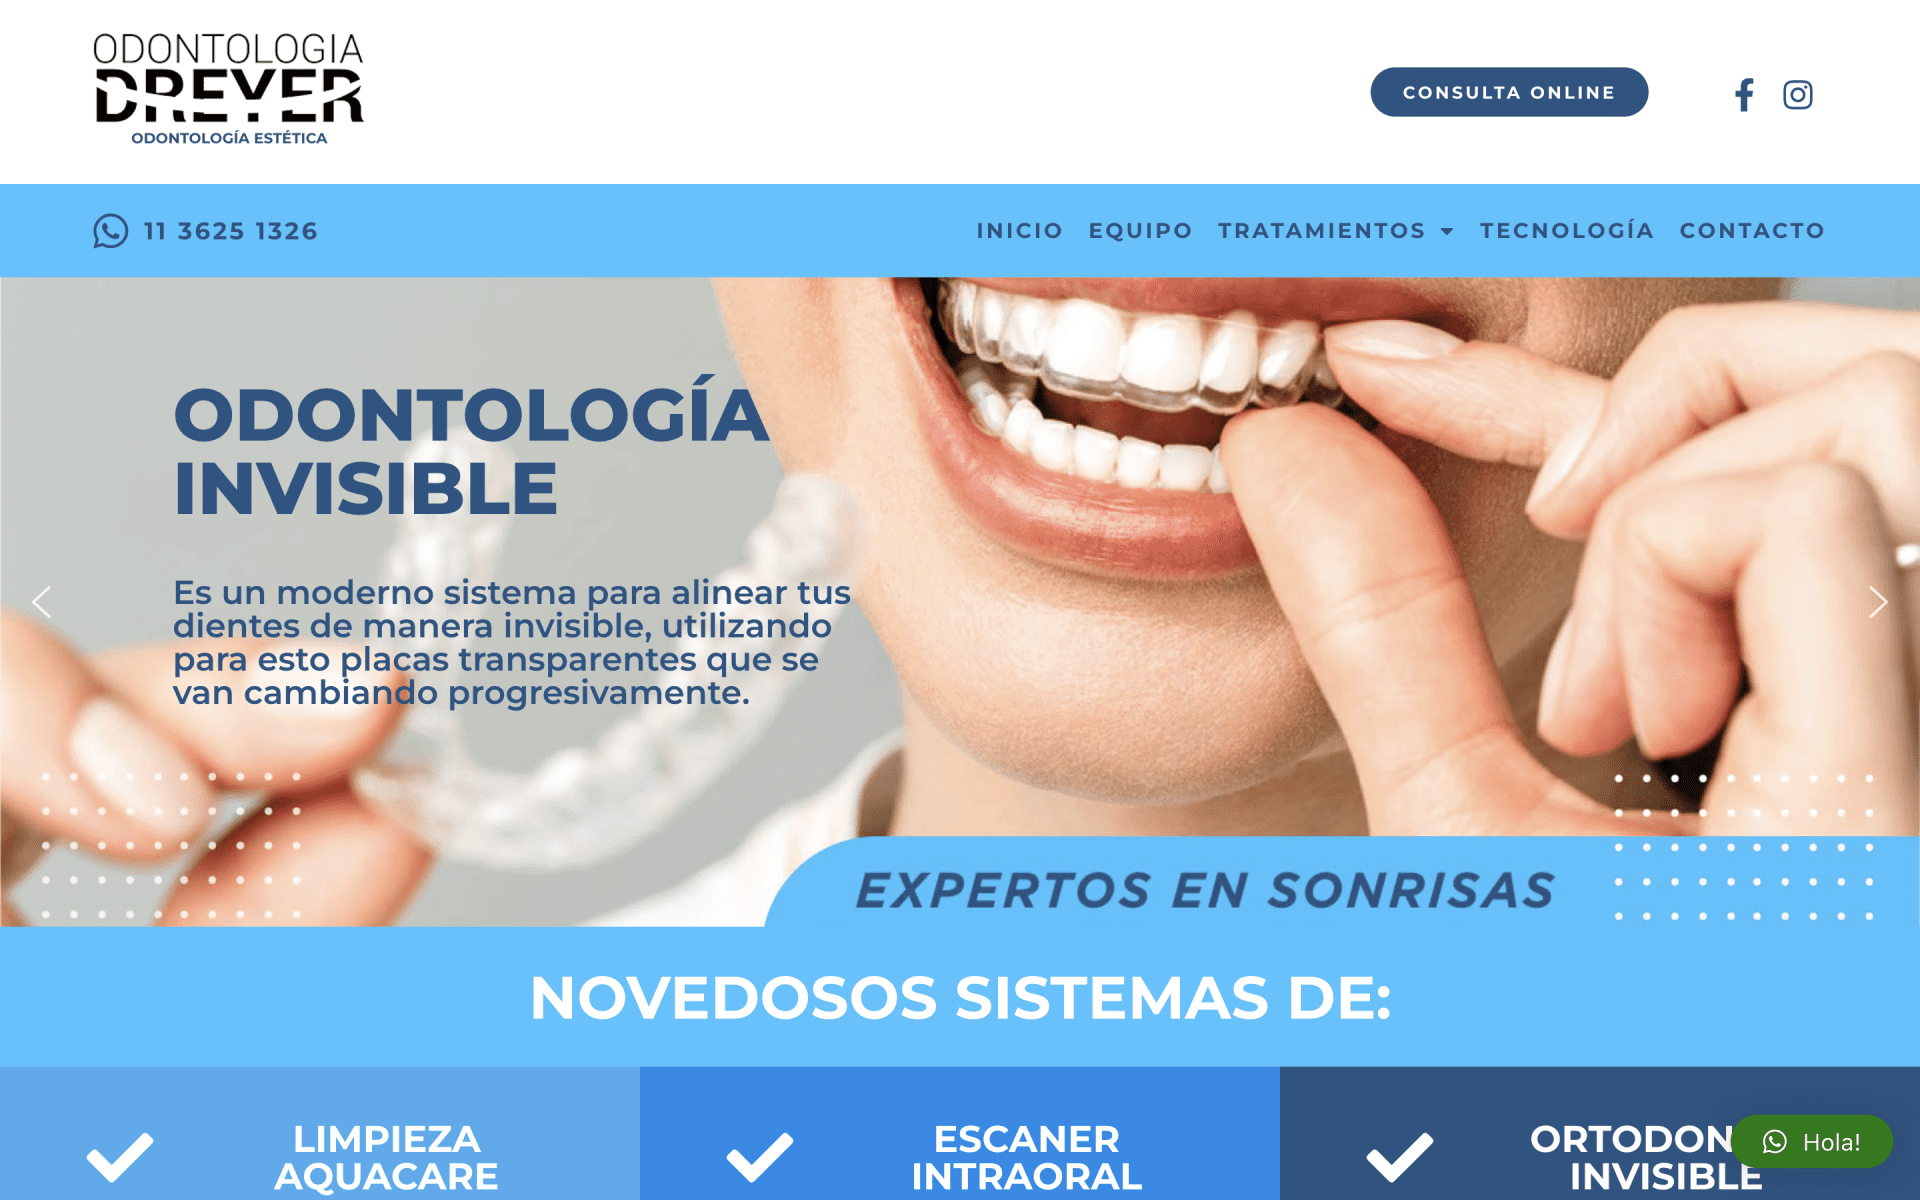 Odontologia Dreyer